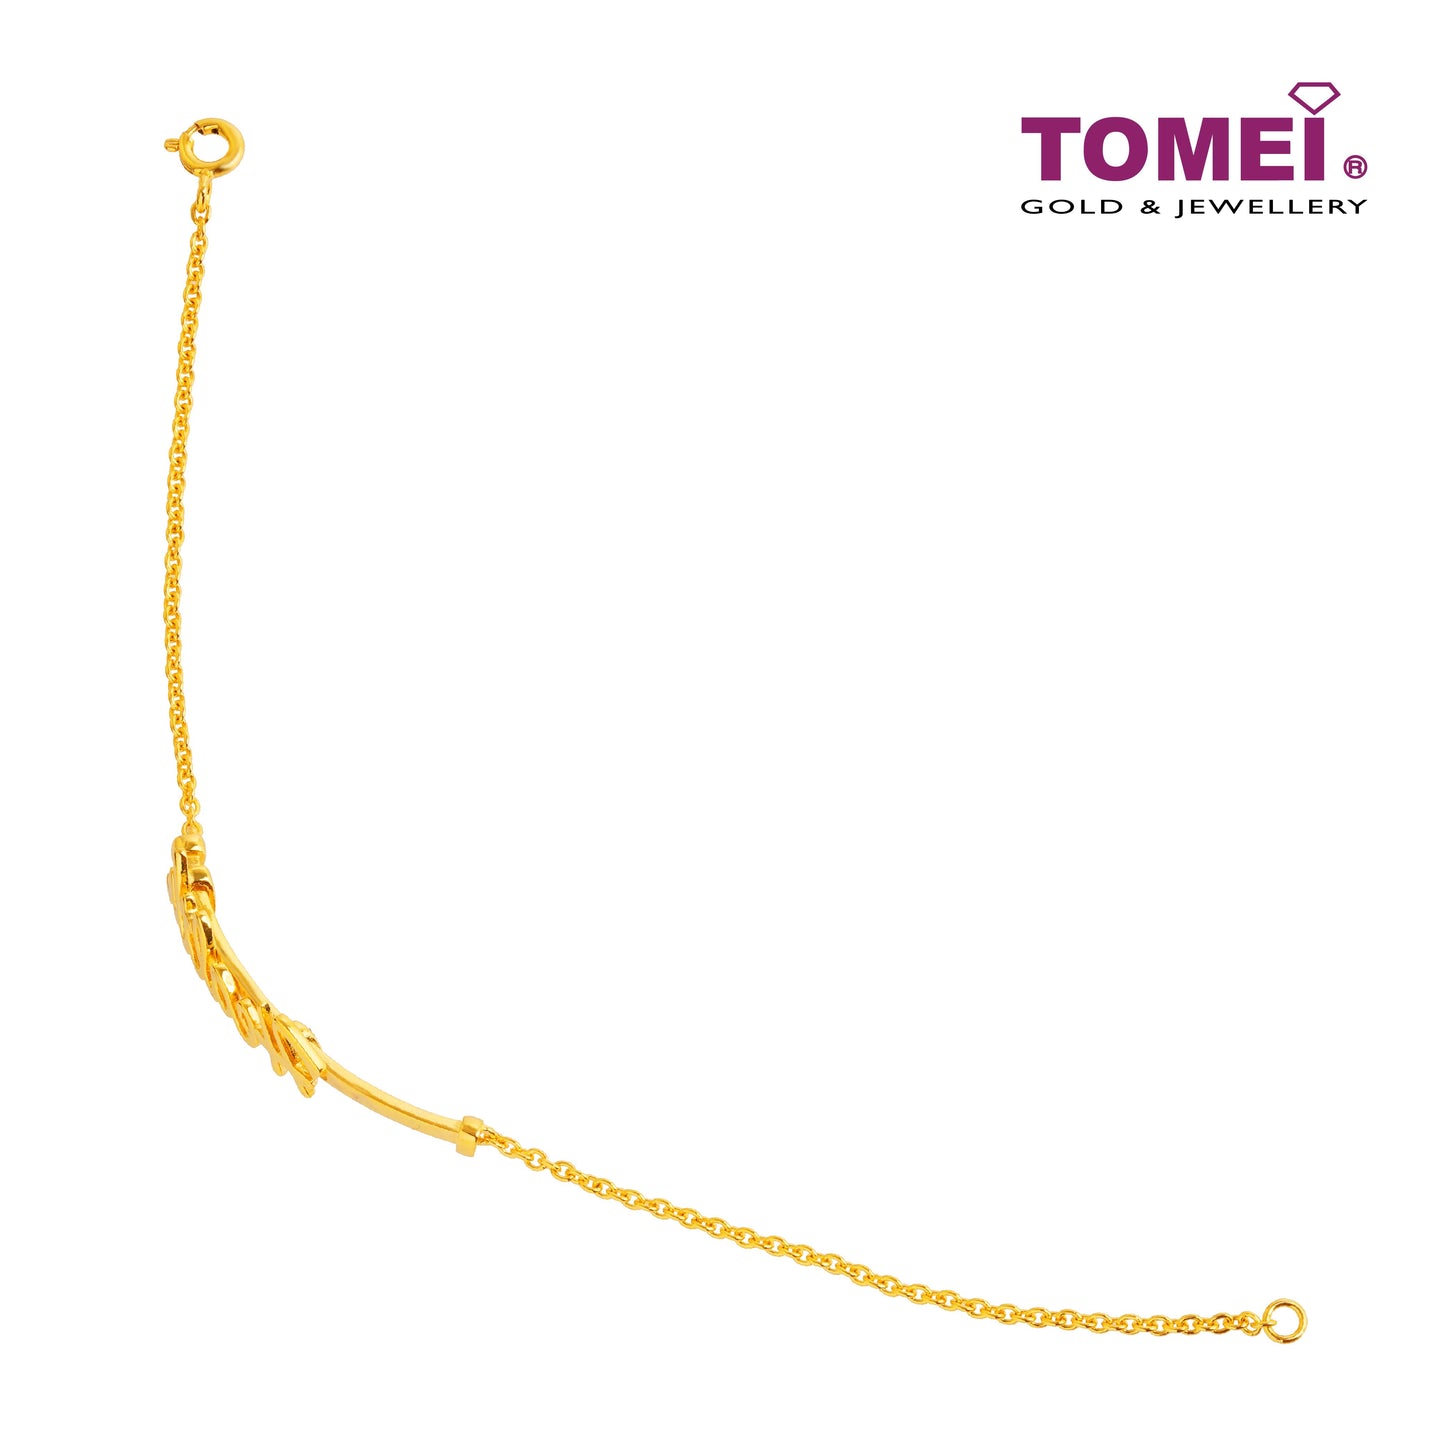 TOMEI Wishing You Good Health Bracelet, Yellow Gold 916